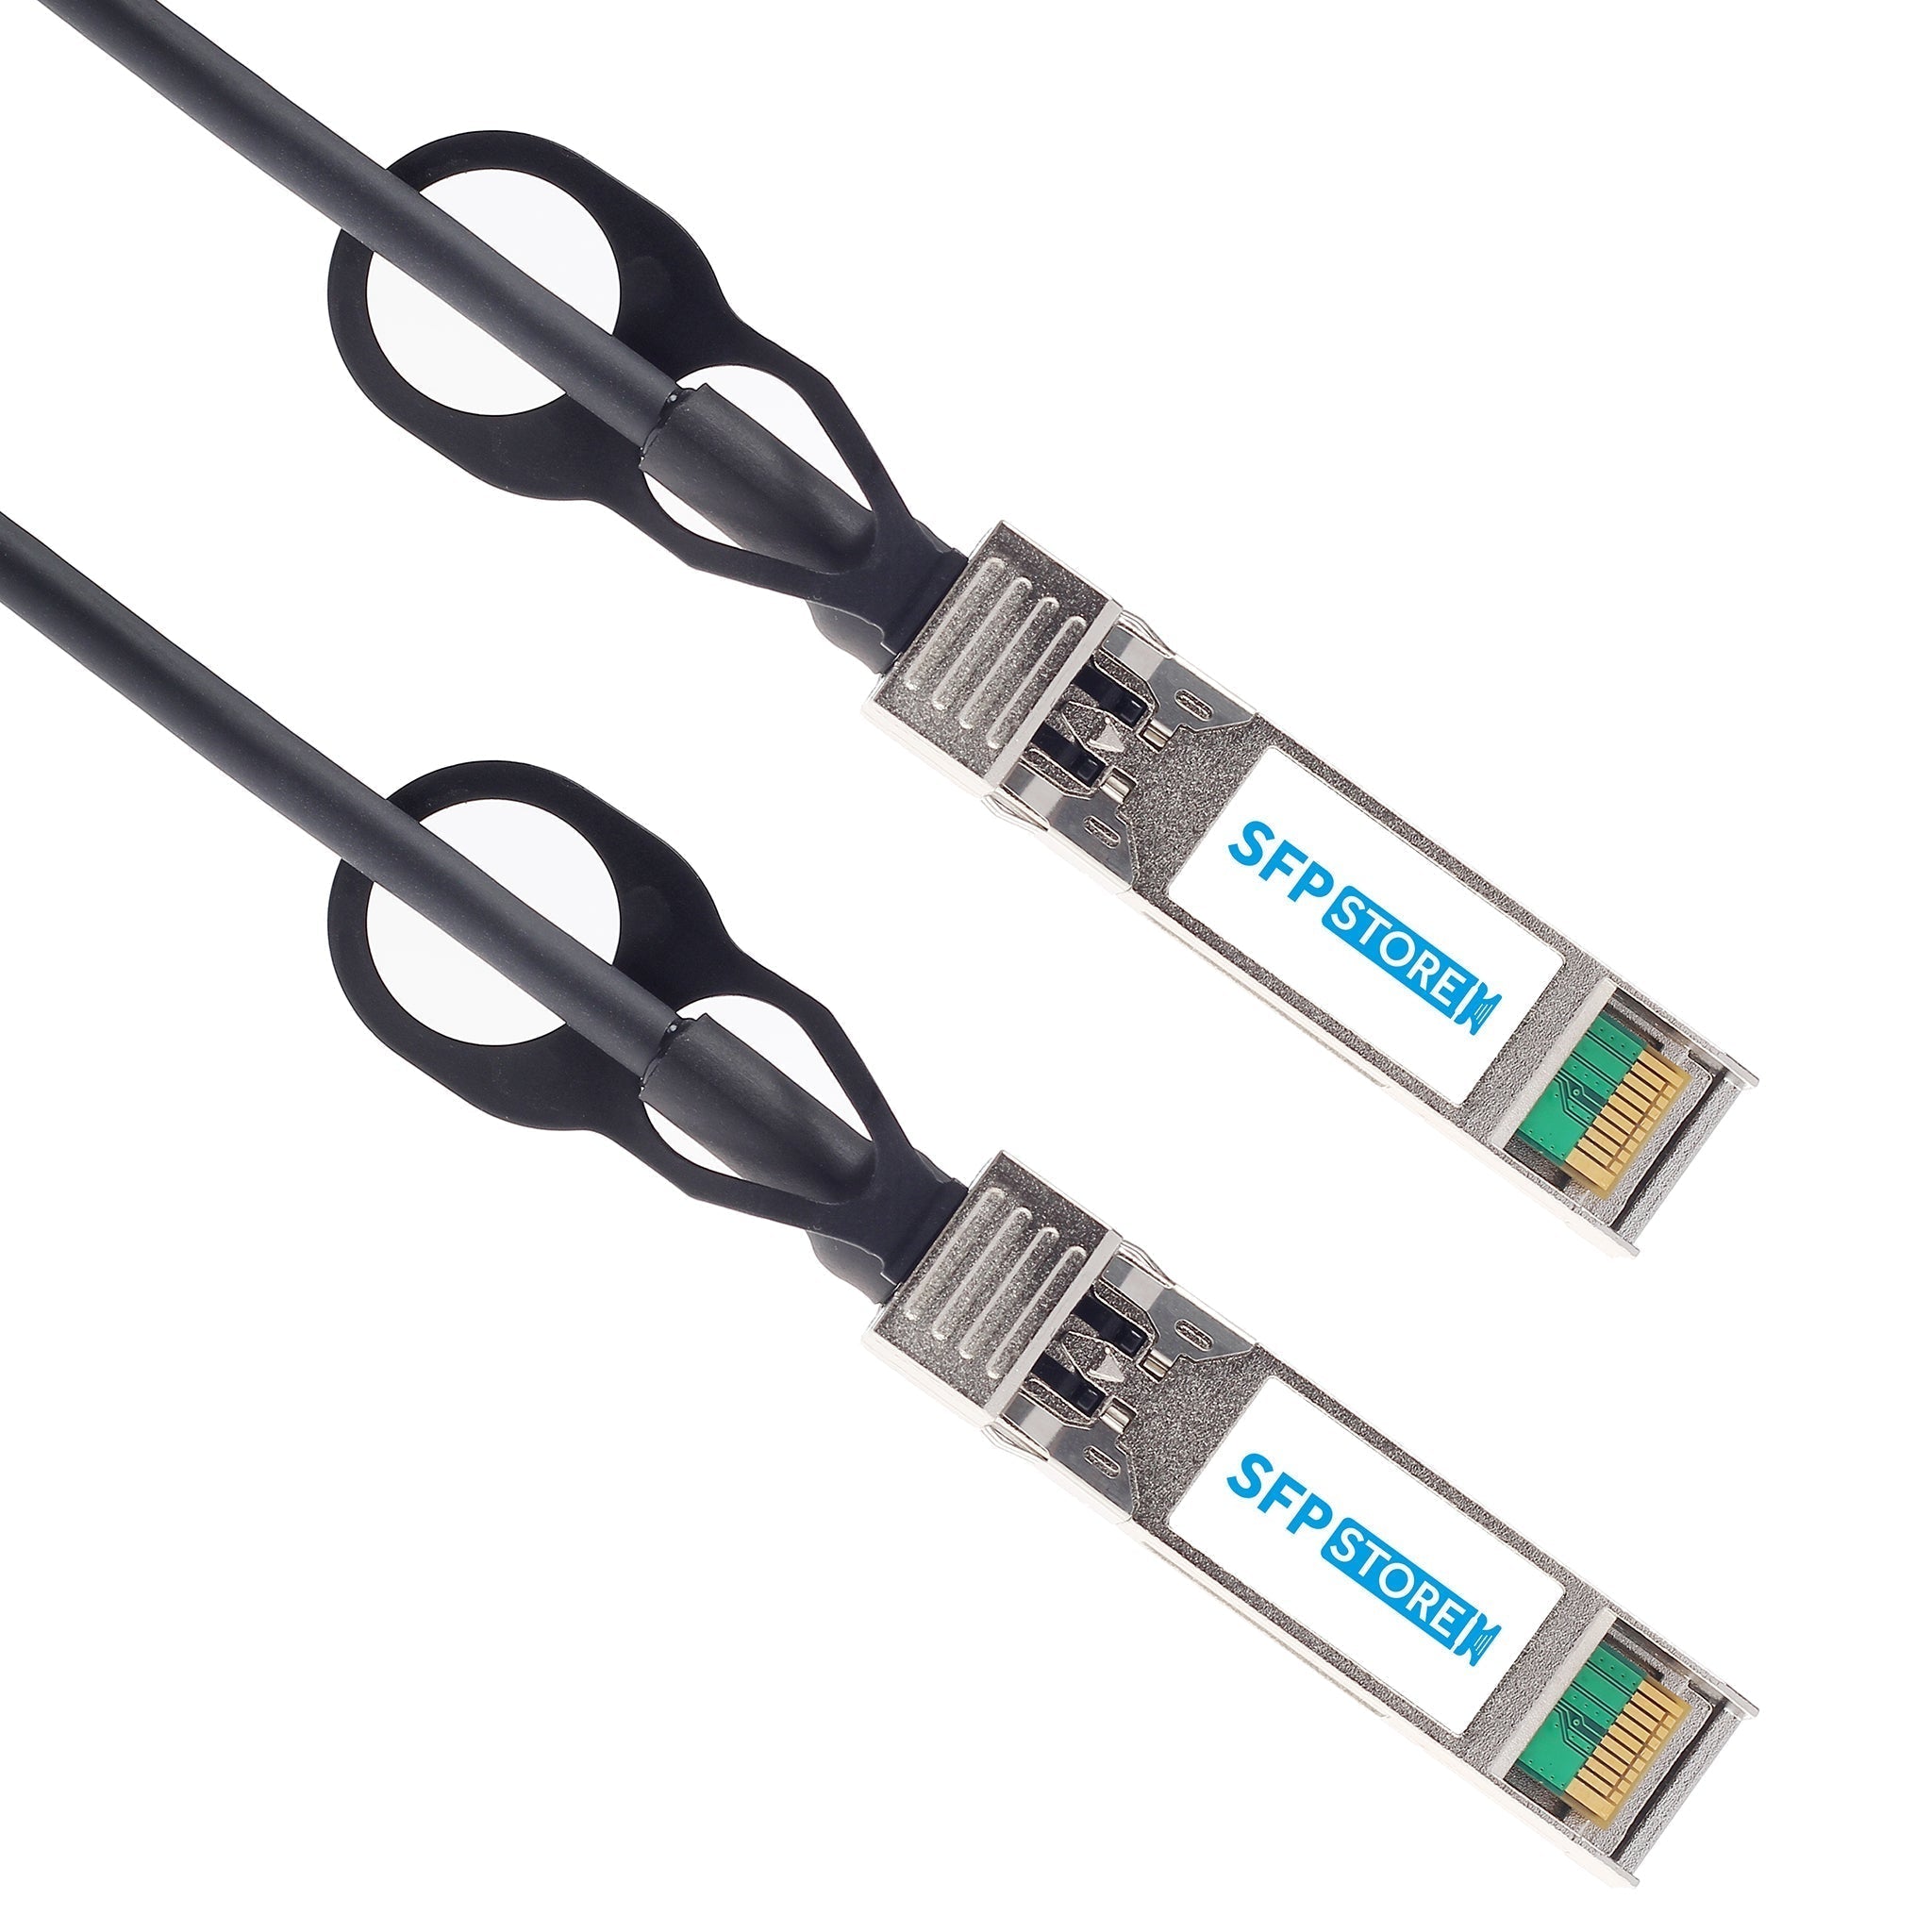 SFP-10G-C-5M-C - 5m Alcatel-Lucent (Nokia) Compatible 10G SFP+ Passive Direct Attach Copper Twinax Cable